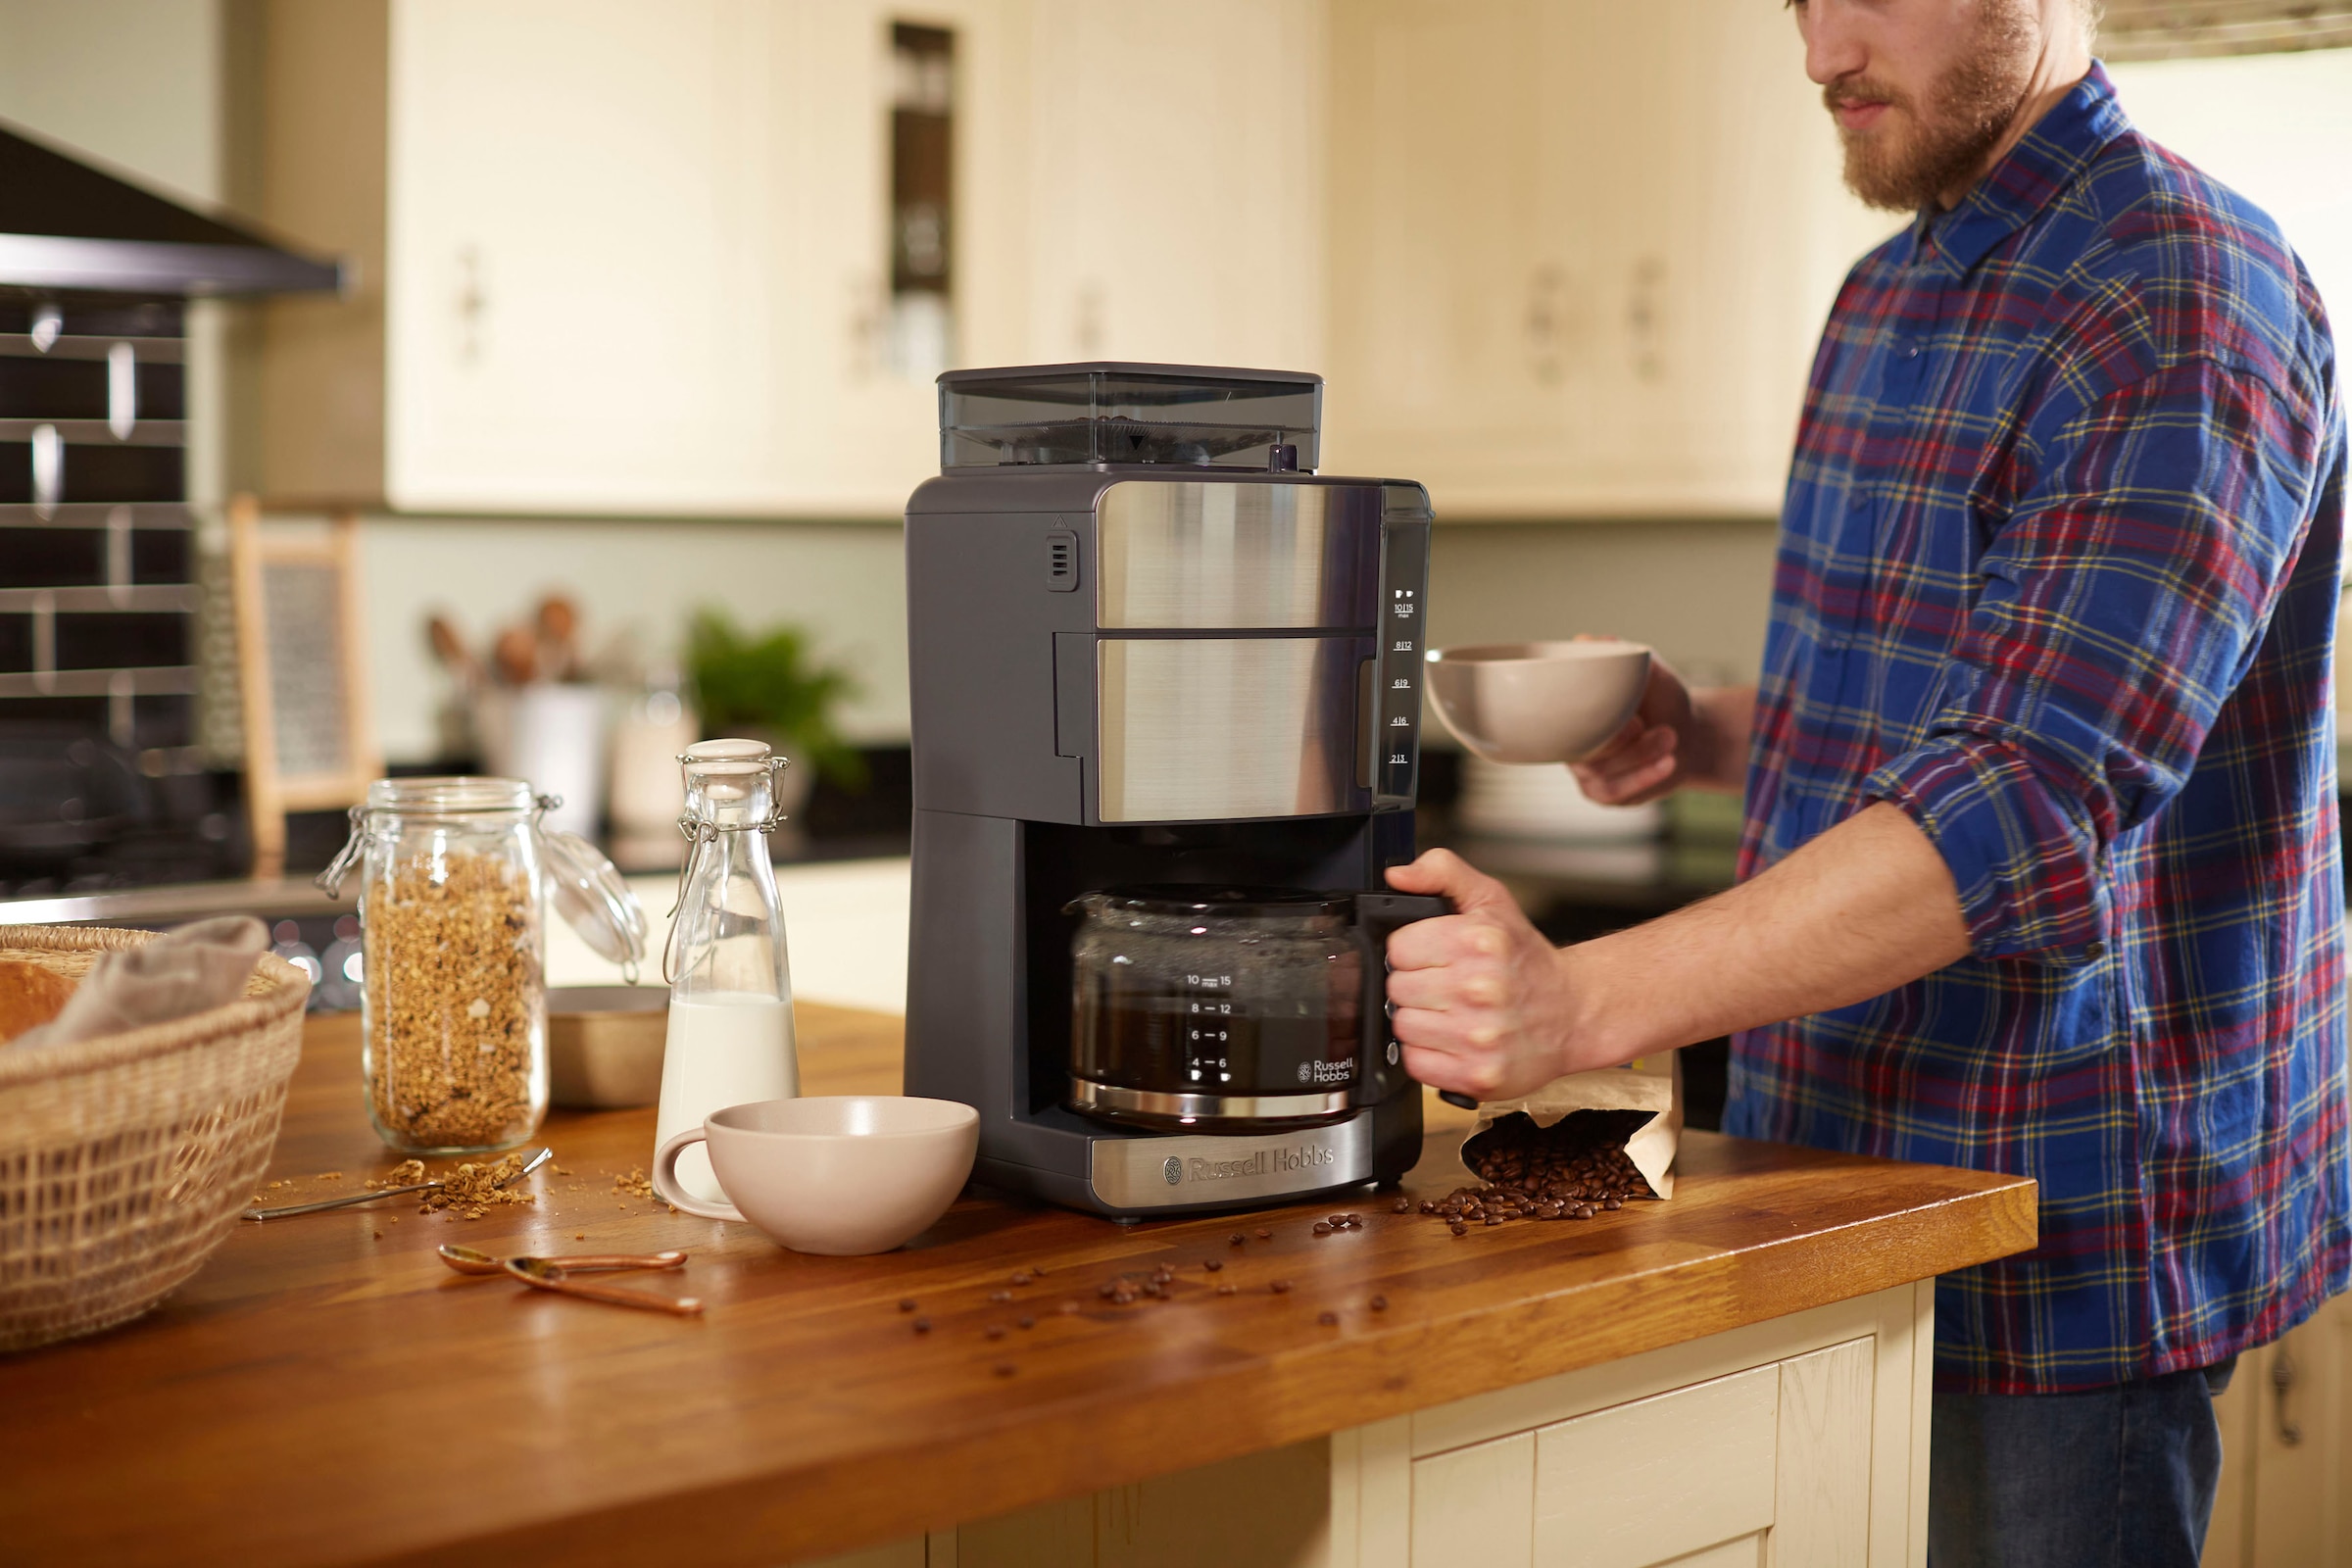 RUSSELL HOBBS Kaffeemaschine mit Mahlwerk »Grind & Brew 25610-56«, 1,25 l Kaffeekanne, Papierfilter, 1x4